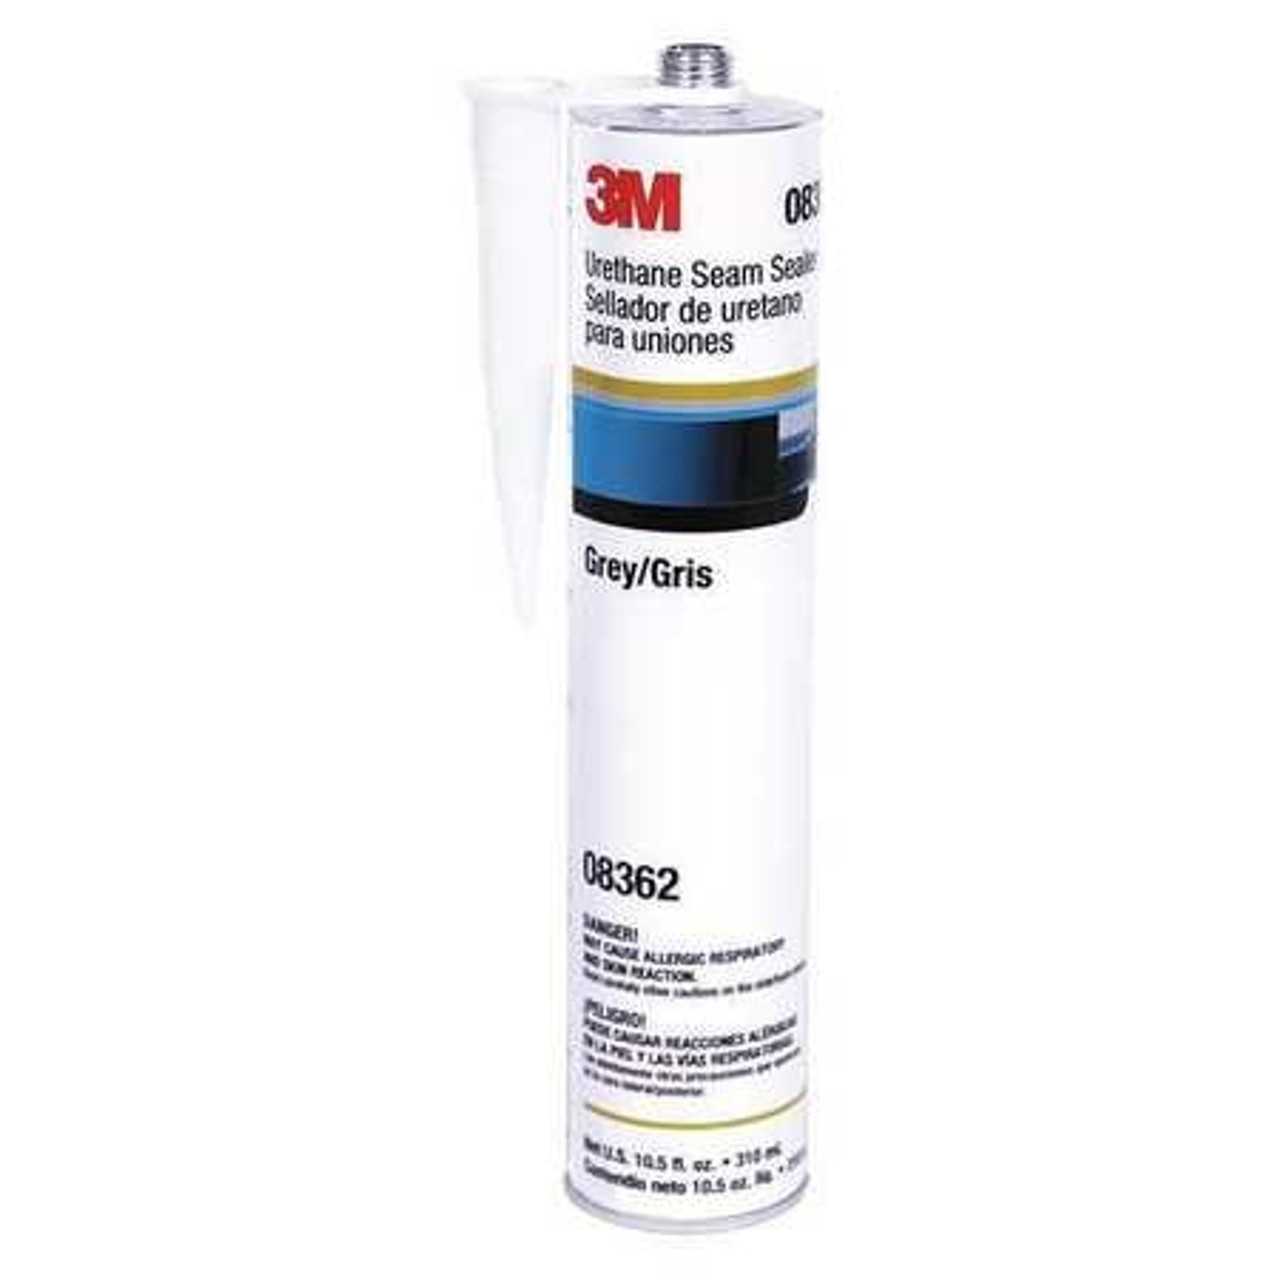 3M 08362 Urethane Seam Sealer Grey Color High Solids Permanently Flexible 310 mL/10.5 fl oz Cartridge